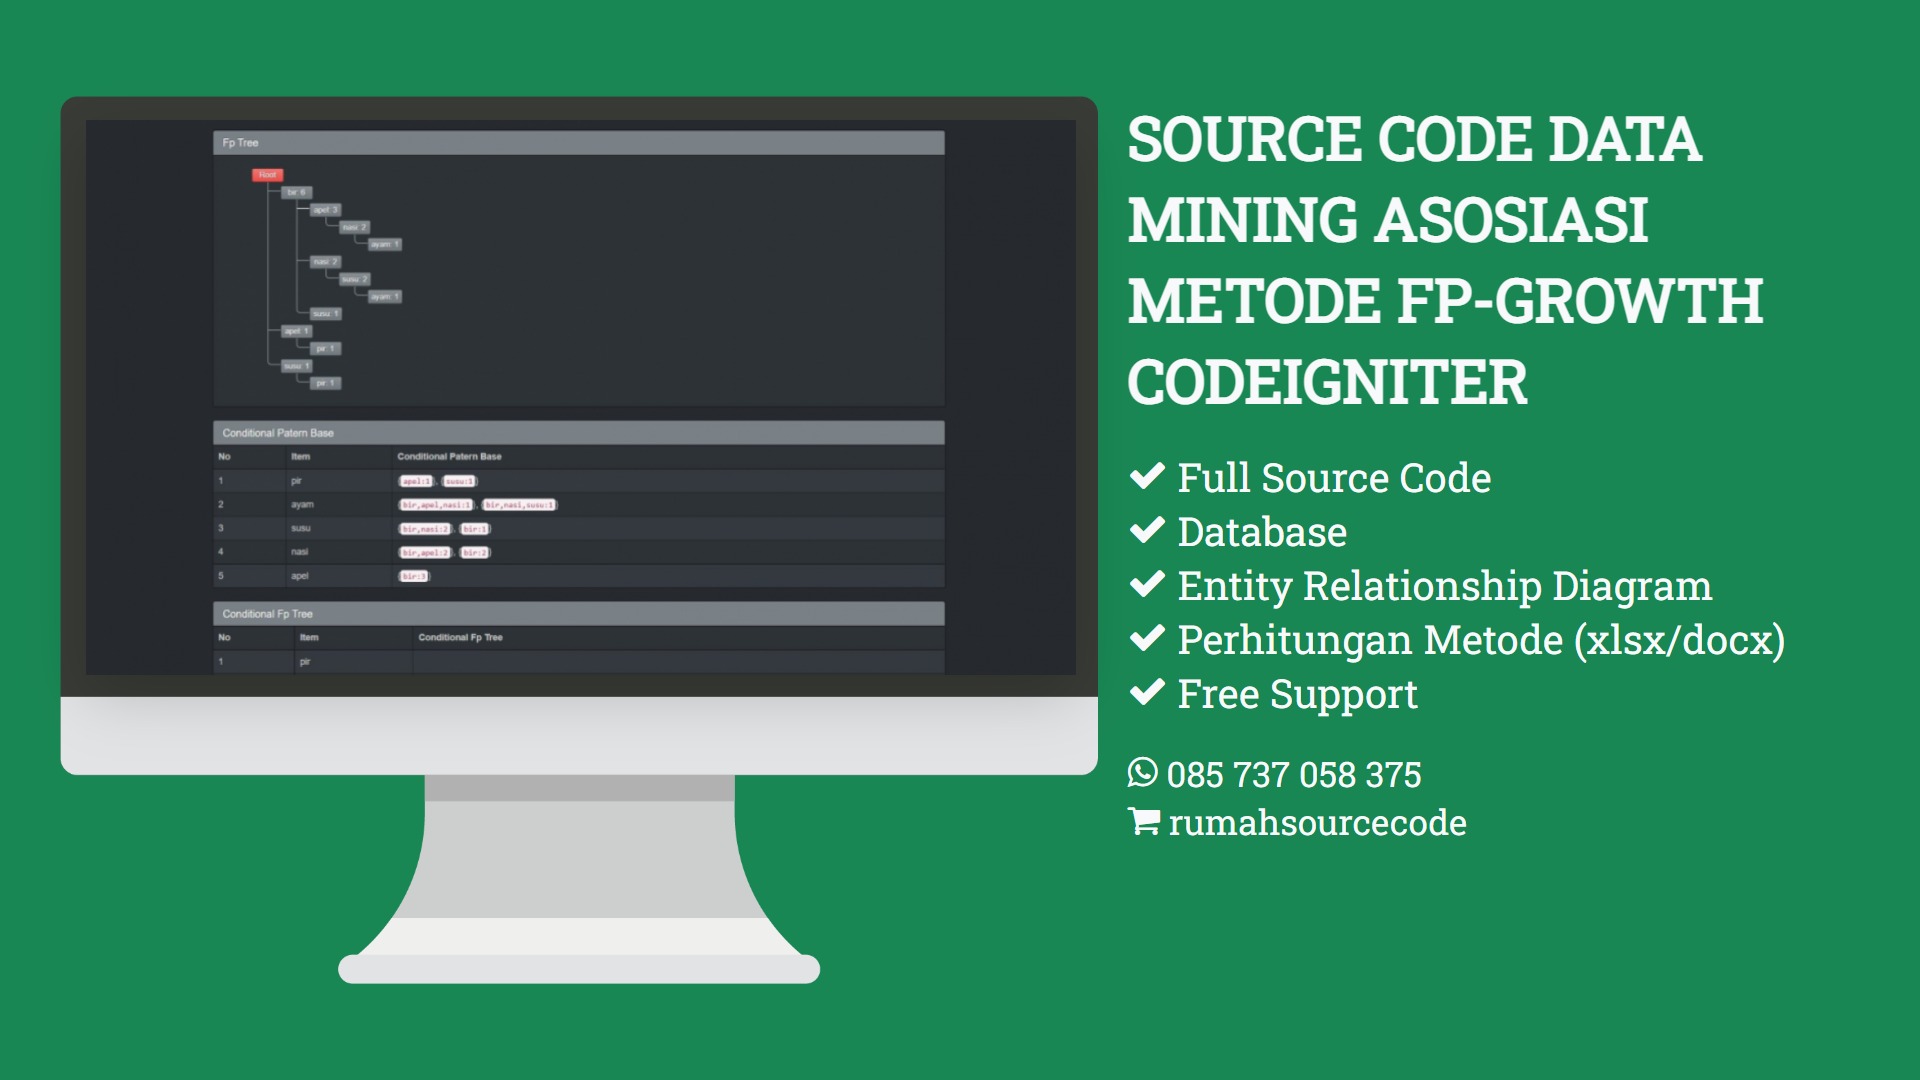 Source Code Data Mining Asosiasi Metode FP-Growth Codeigniter